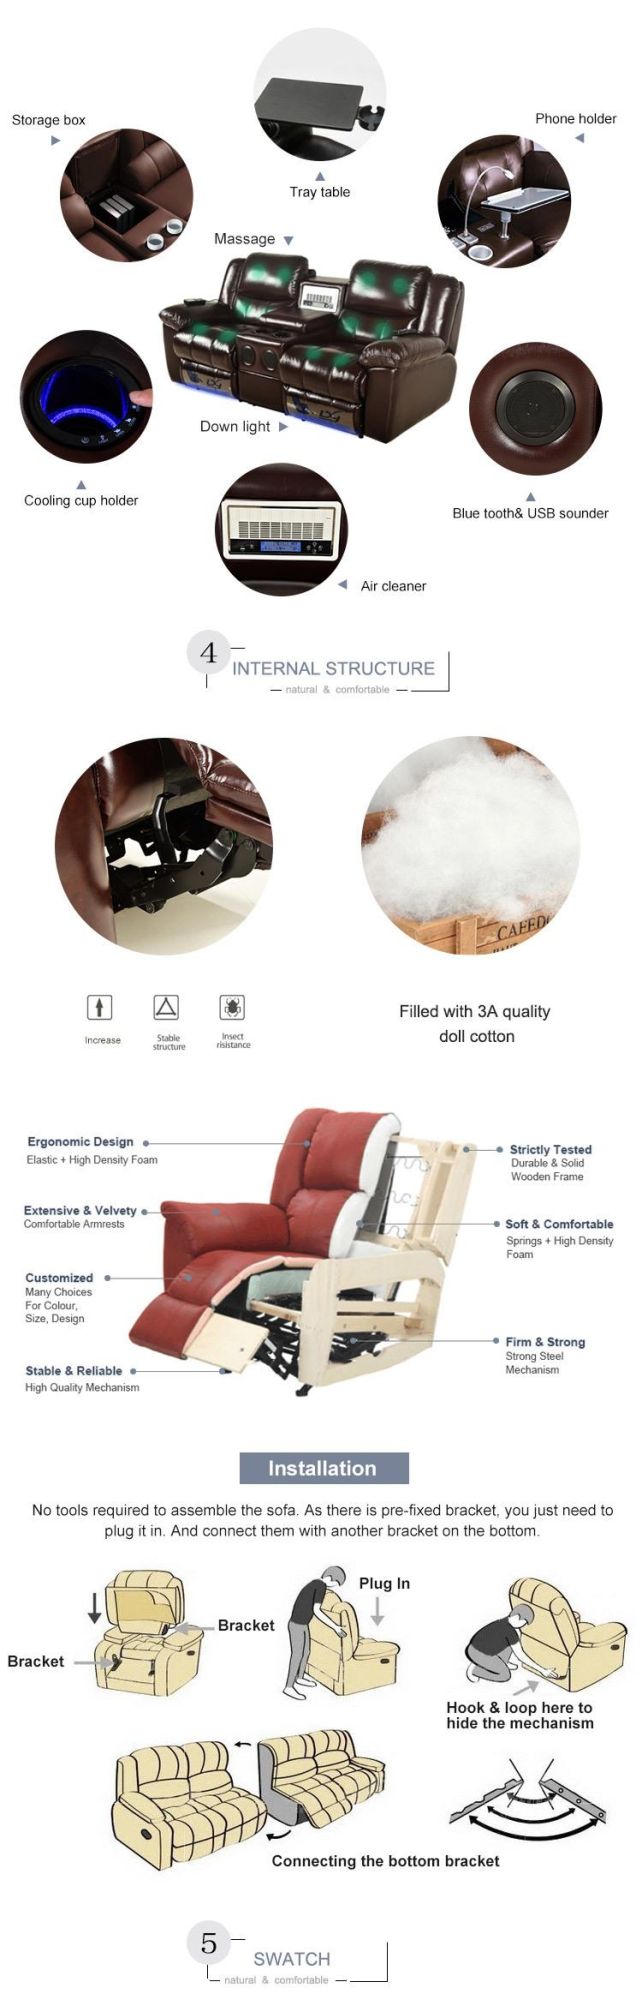 New Modern Classic Design Furniture China Sofa Leather Sofa